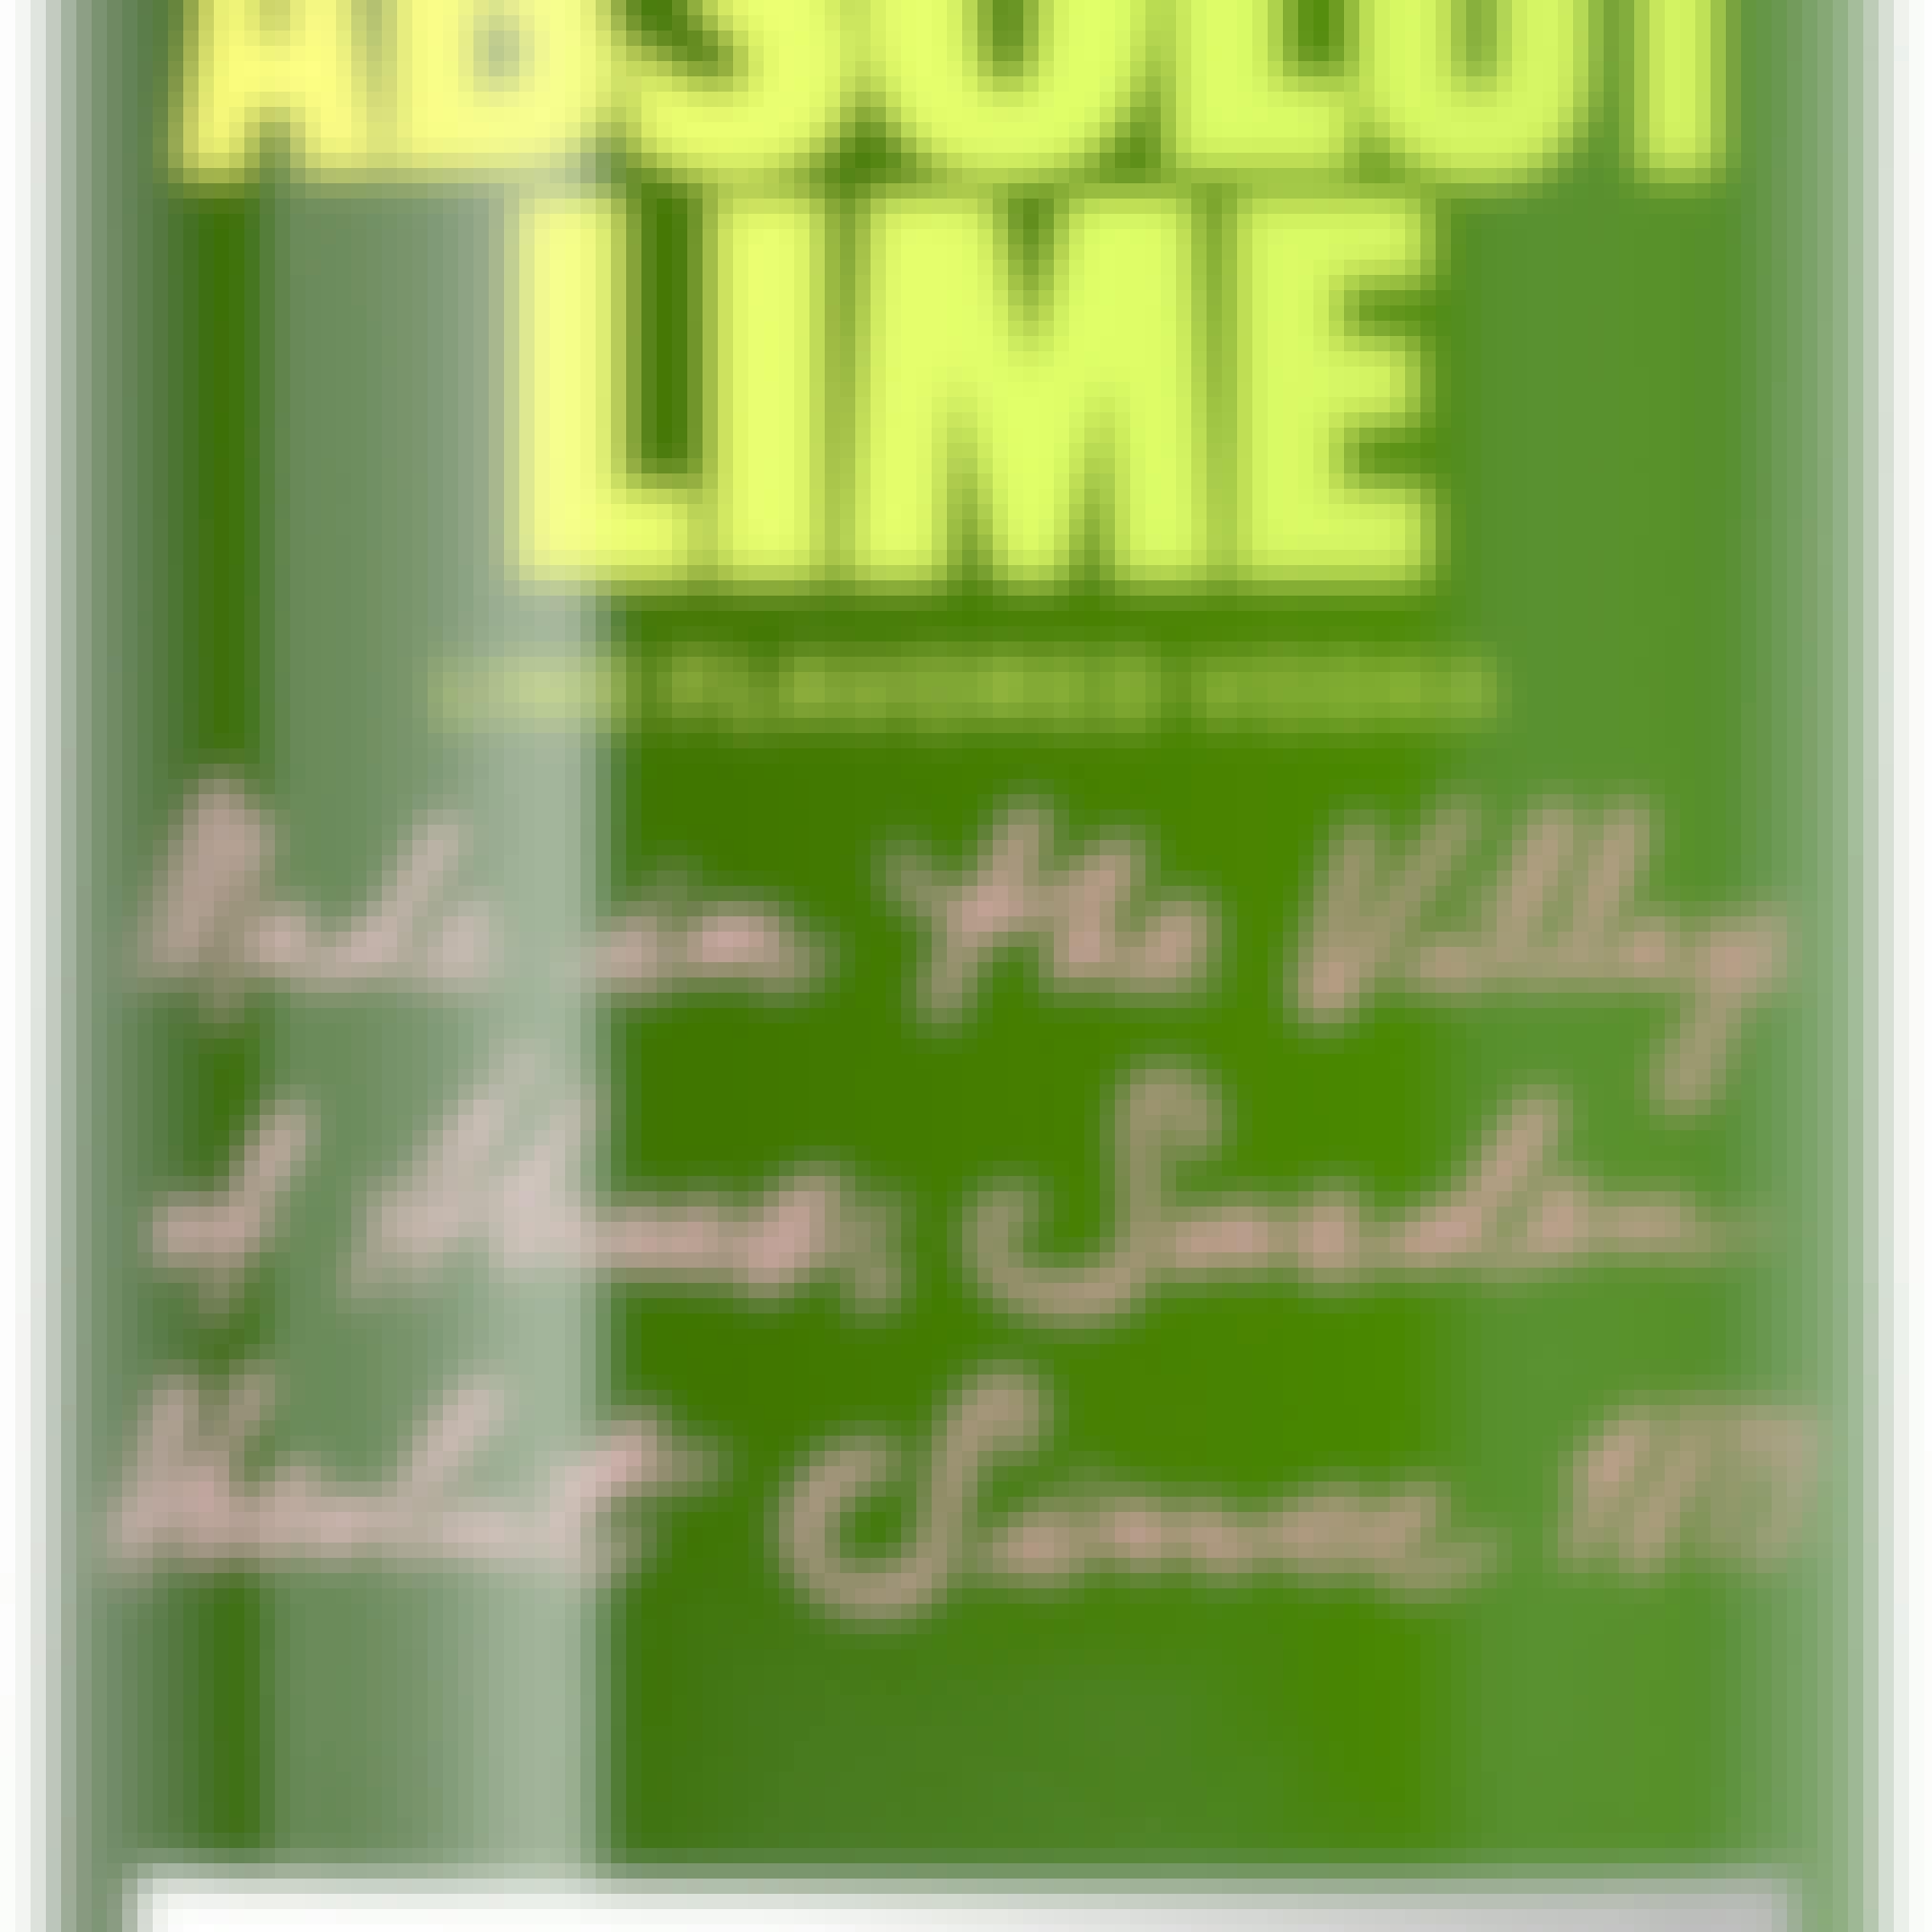 Absolut Lime Vodka 1L